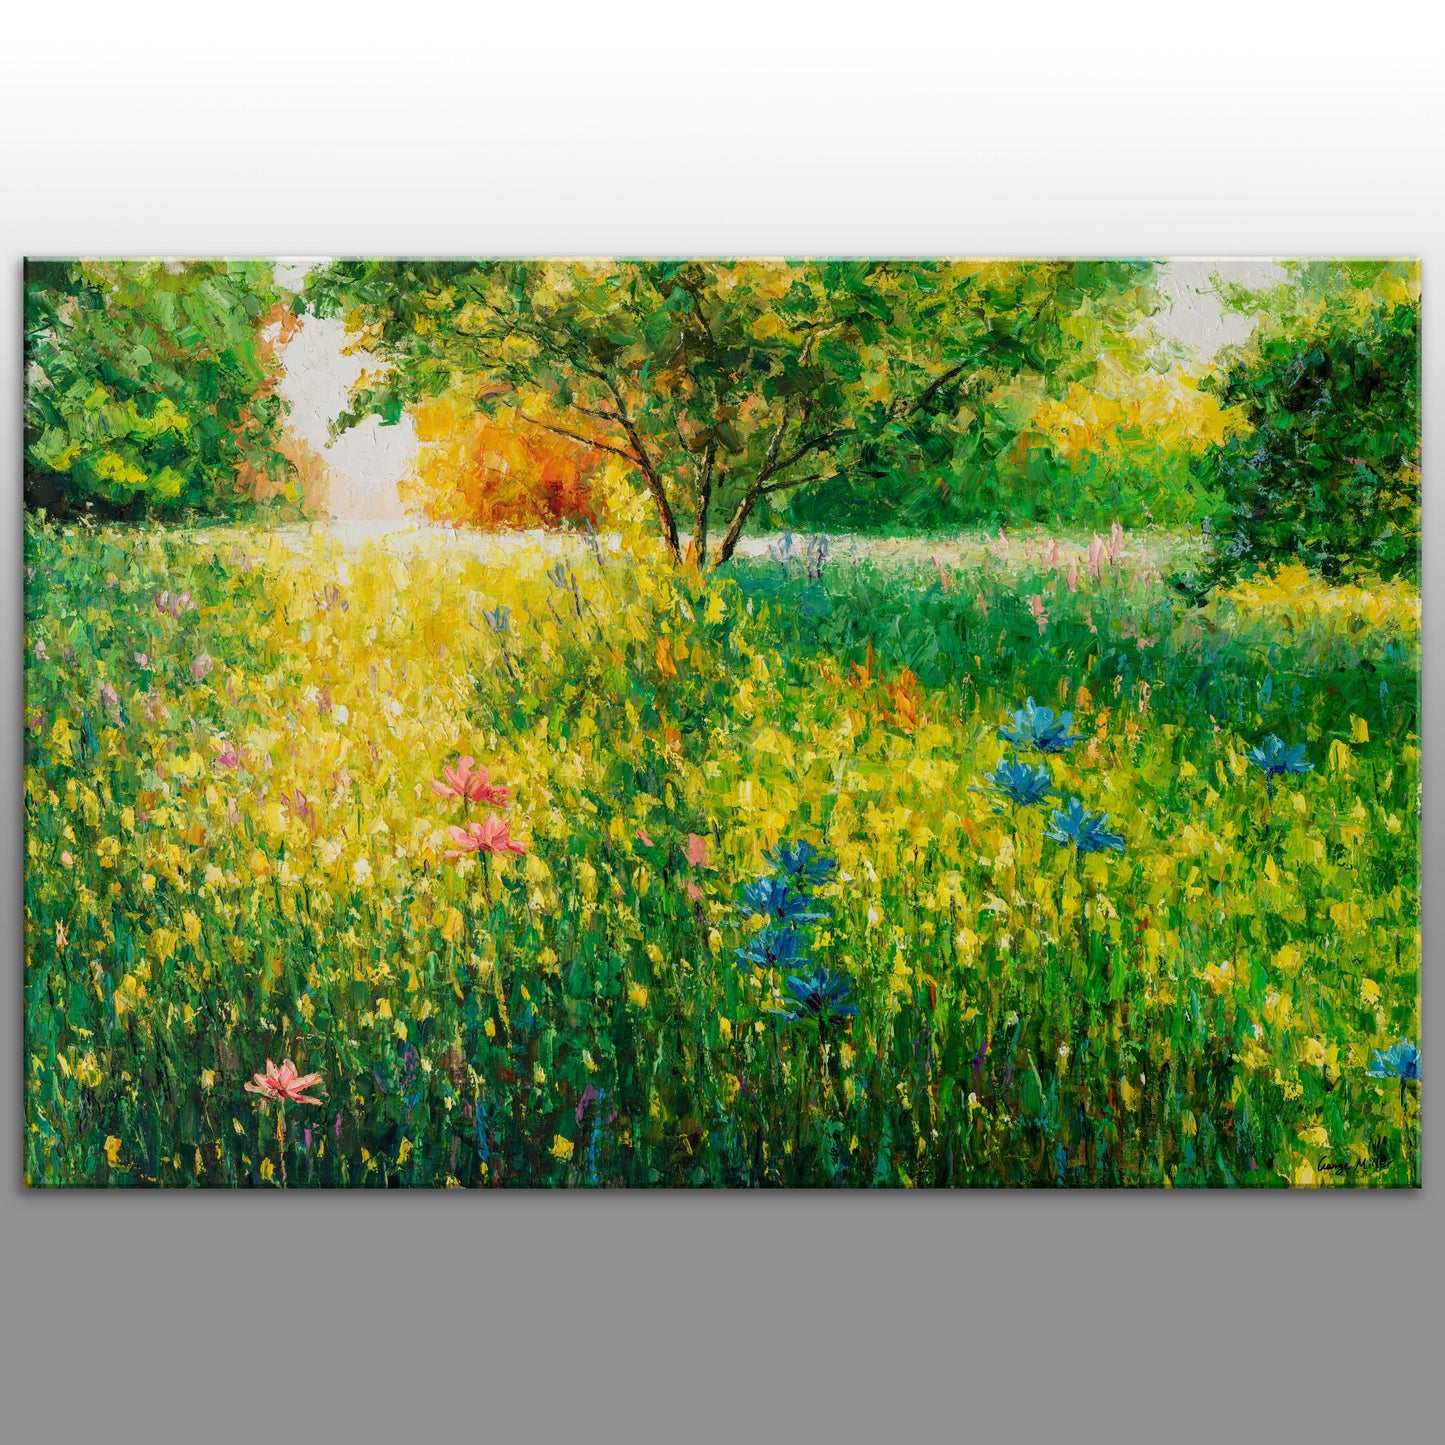 Original Landscape Oil Painting, "Emerald Meadow", Large Textured Impasto Art - GeorgeMillerArt